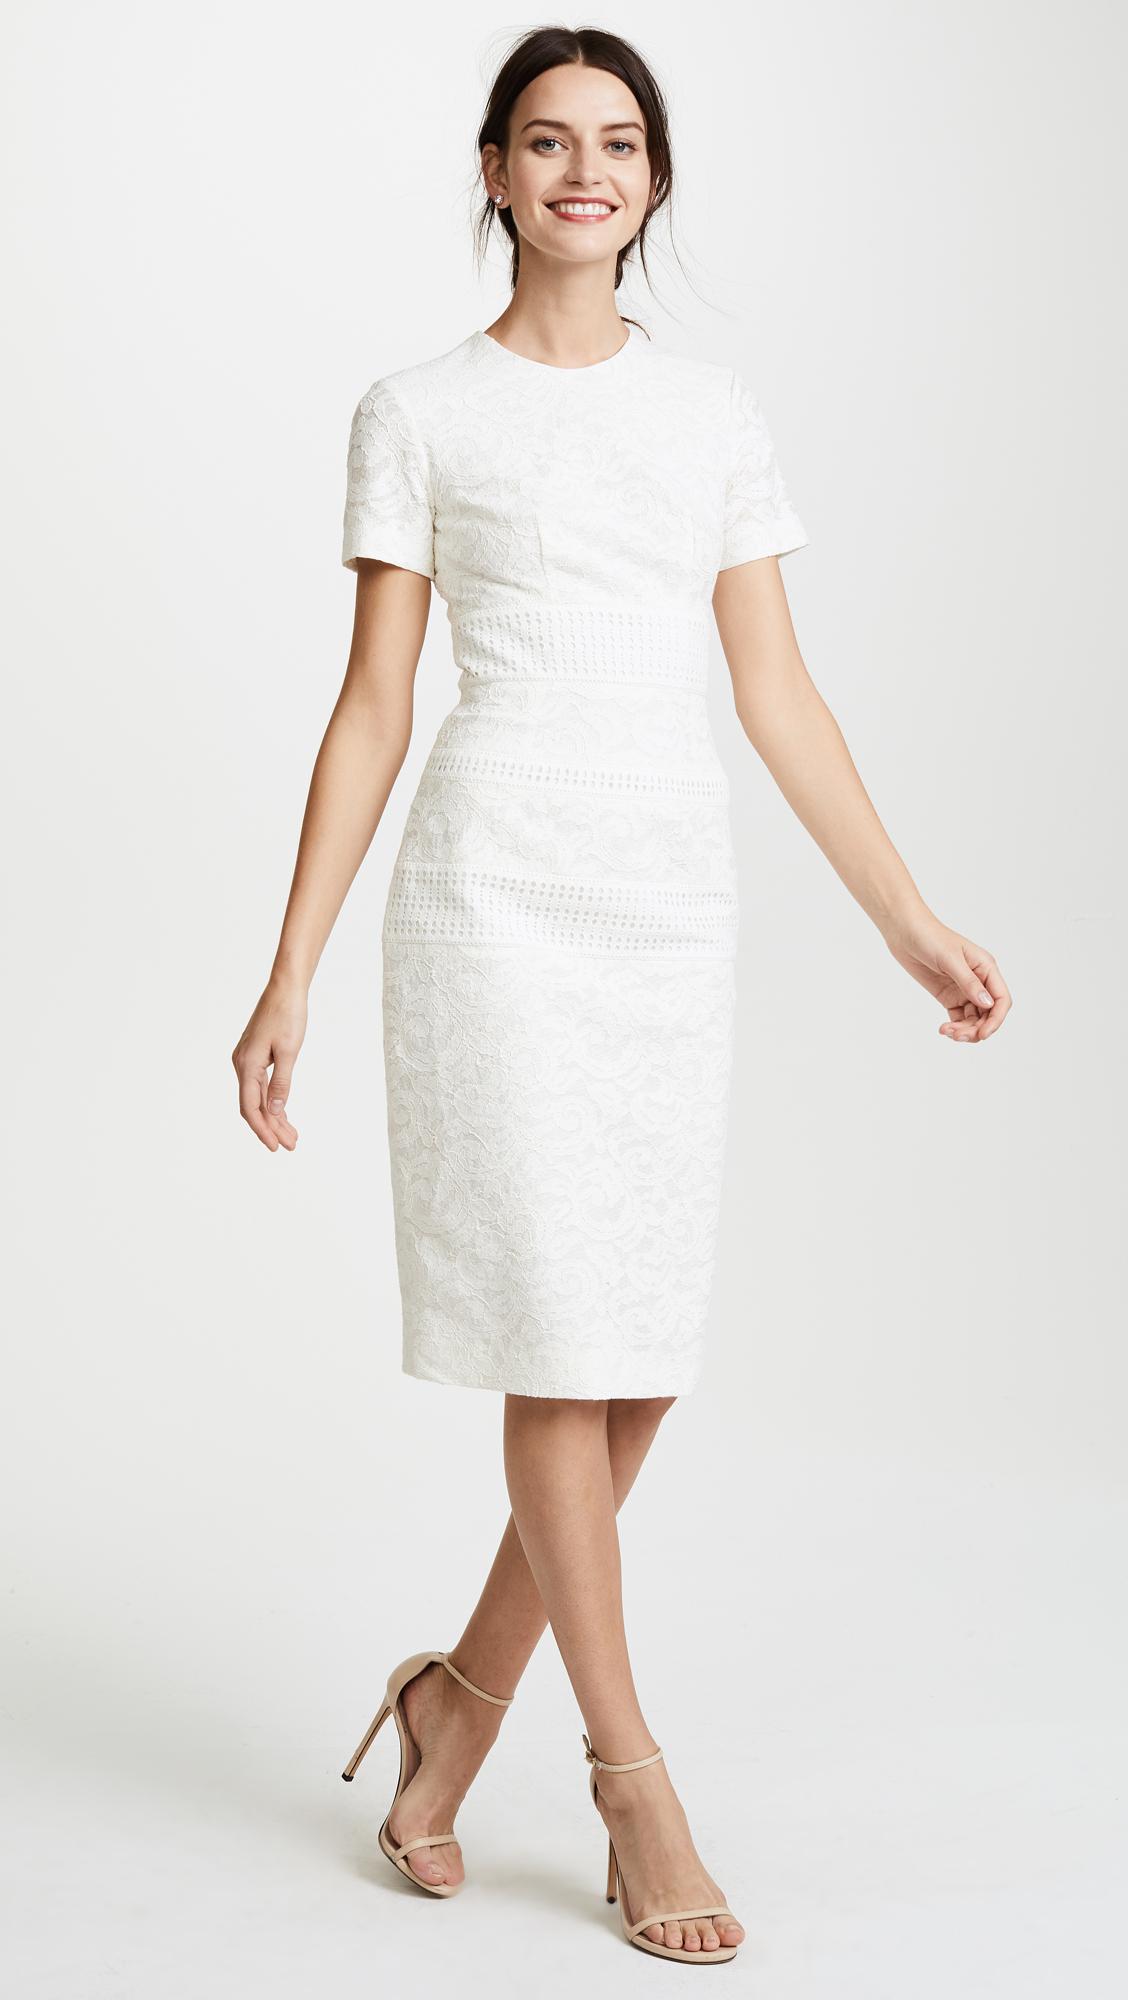 Classic white sheath dress for women for women